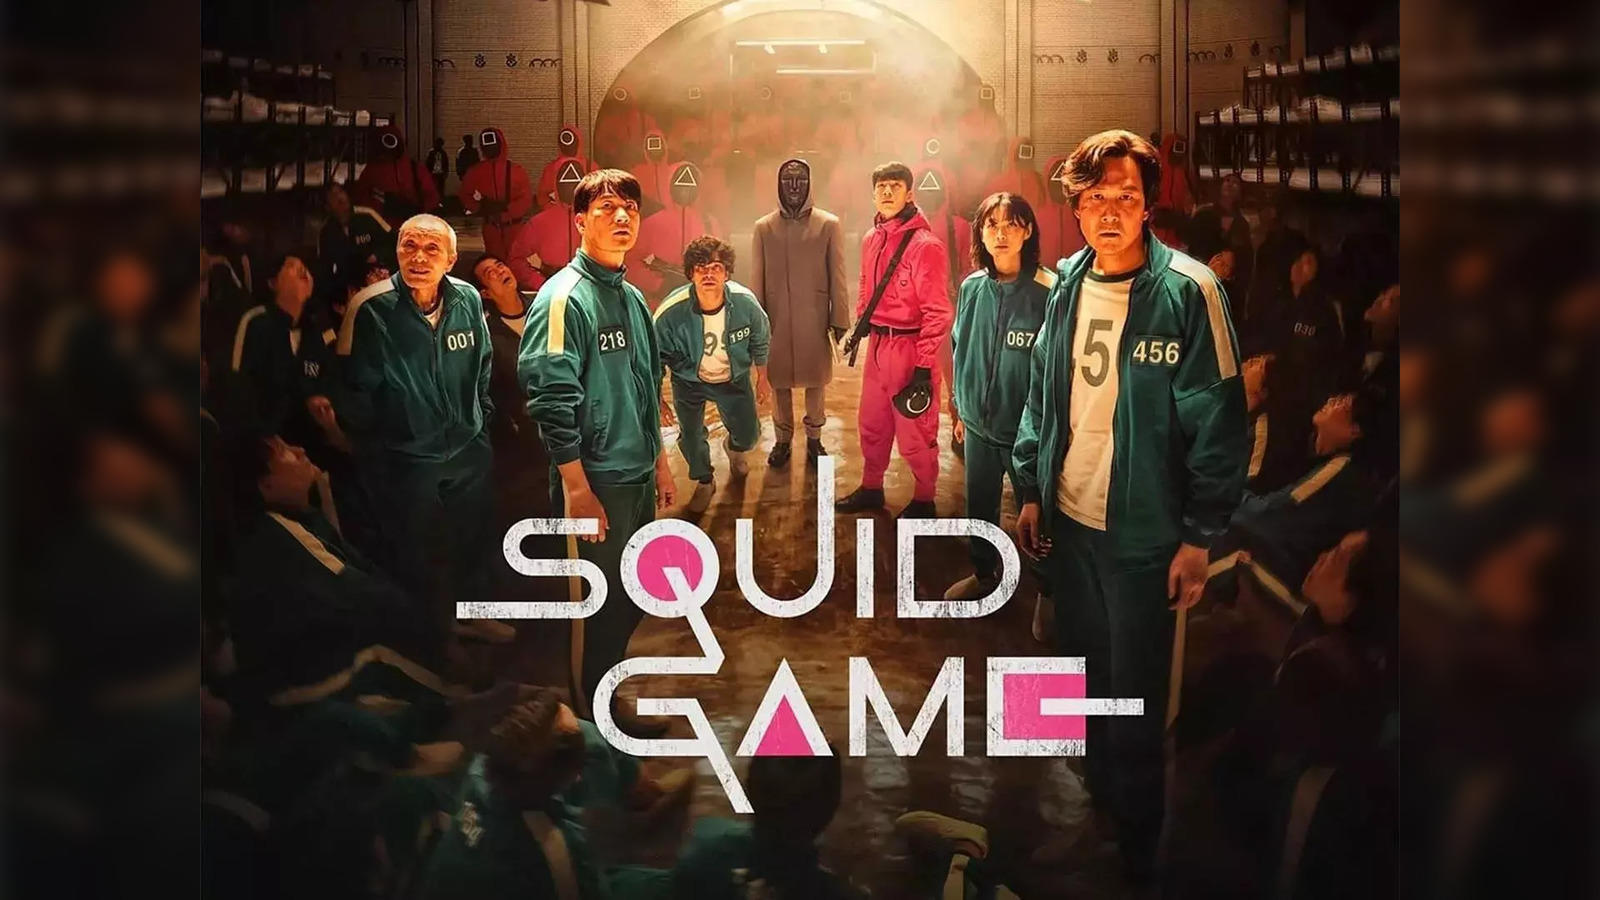 Upcoming Movies - Squid Game Season 2 coming next year! 🎥